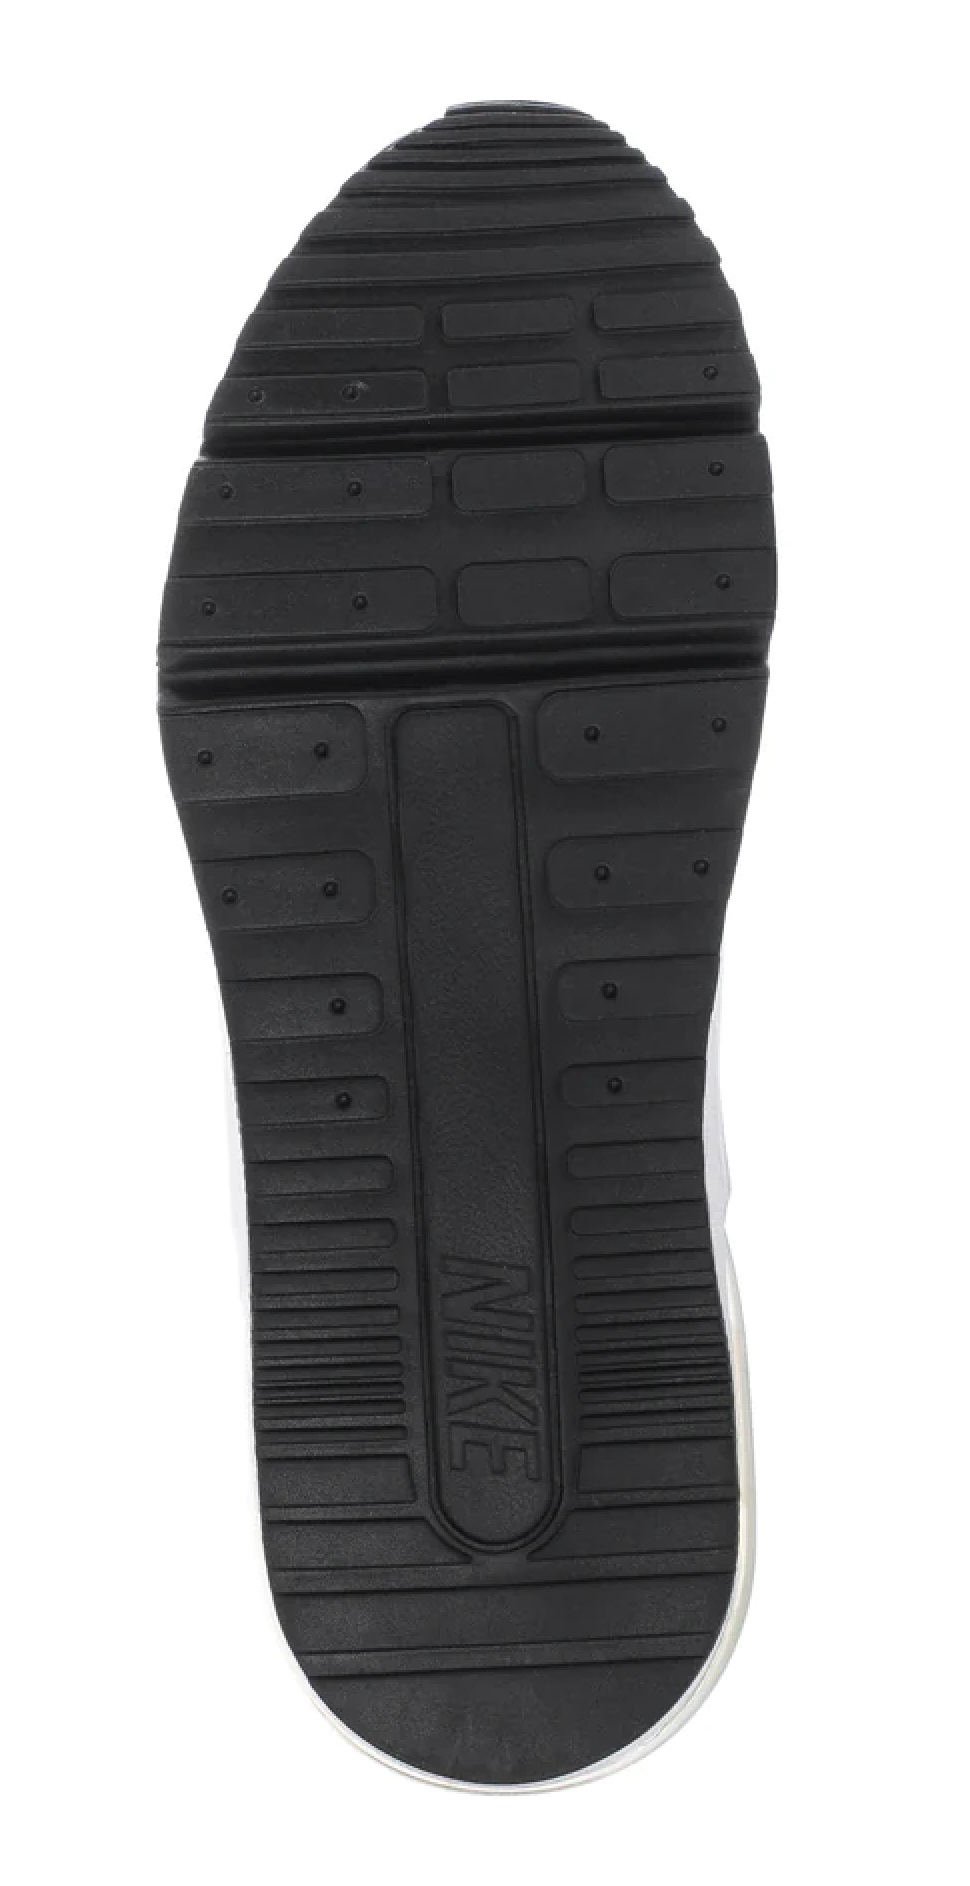 Nike Men's Air Max LTD 3 Premium Leather Lifestyle Shoe